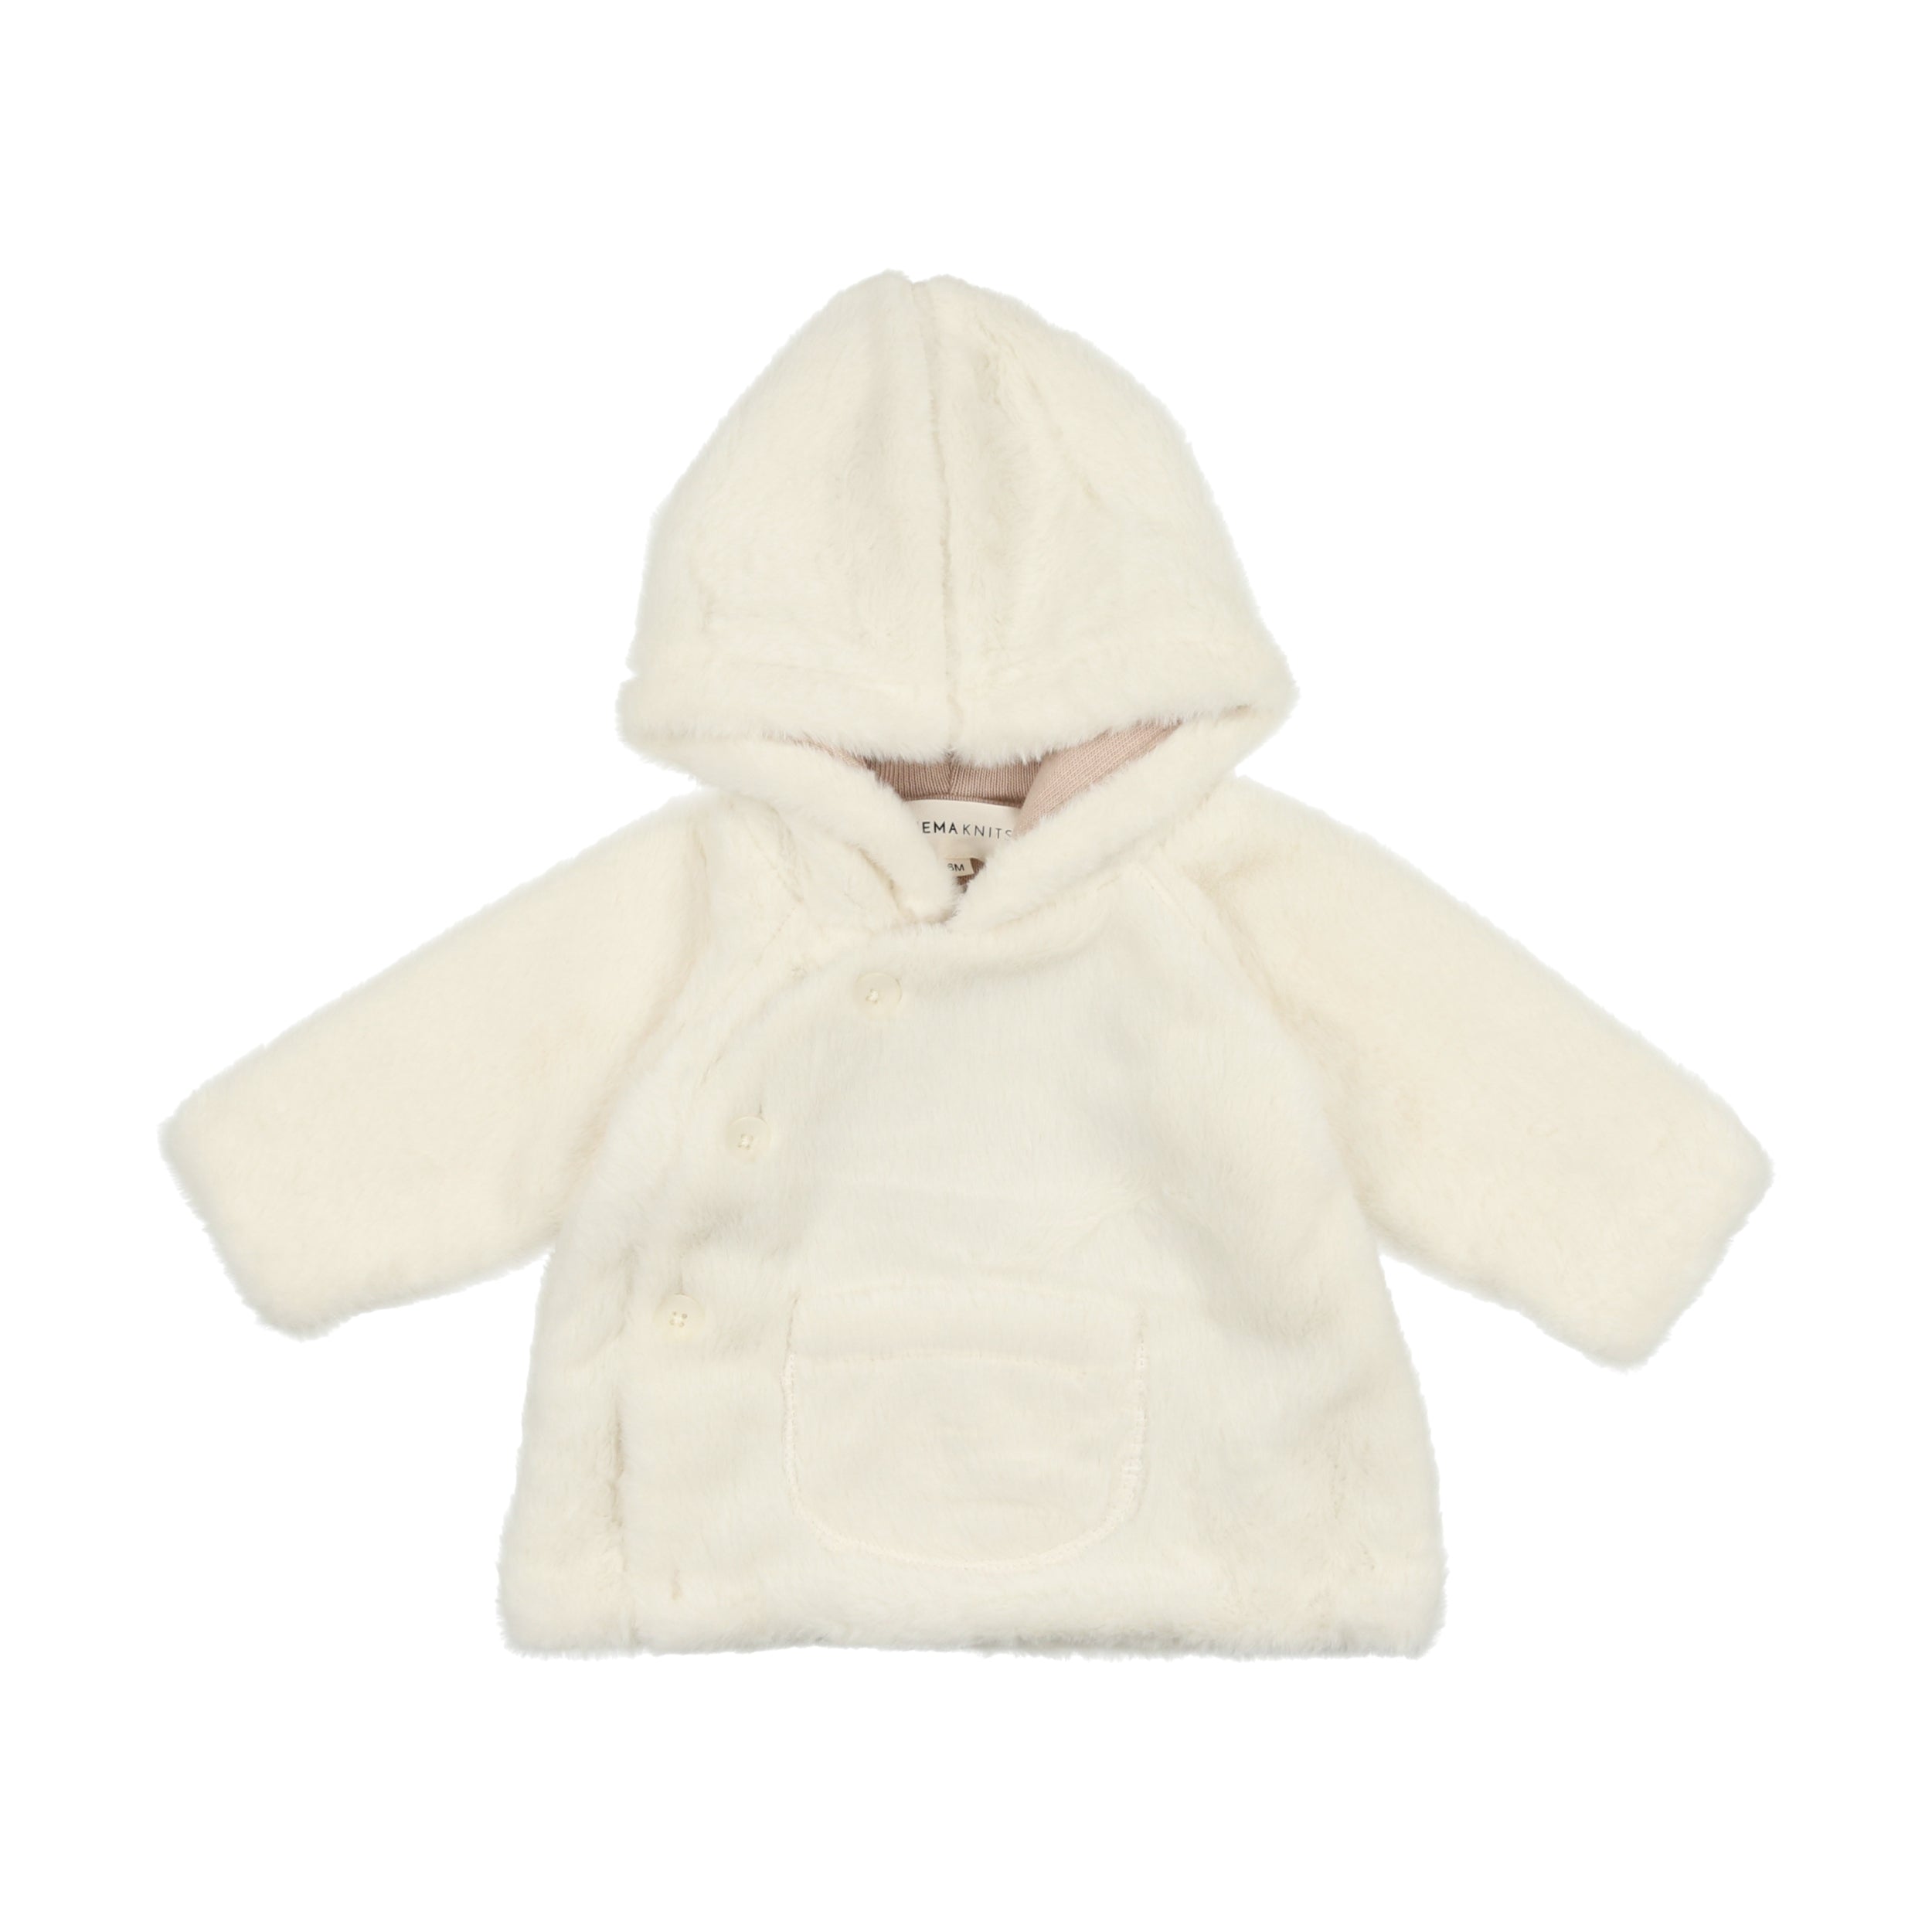 Cream Fur Baby Jacket